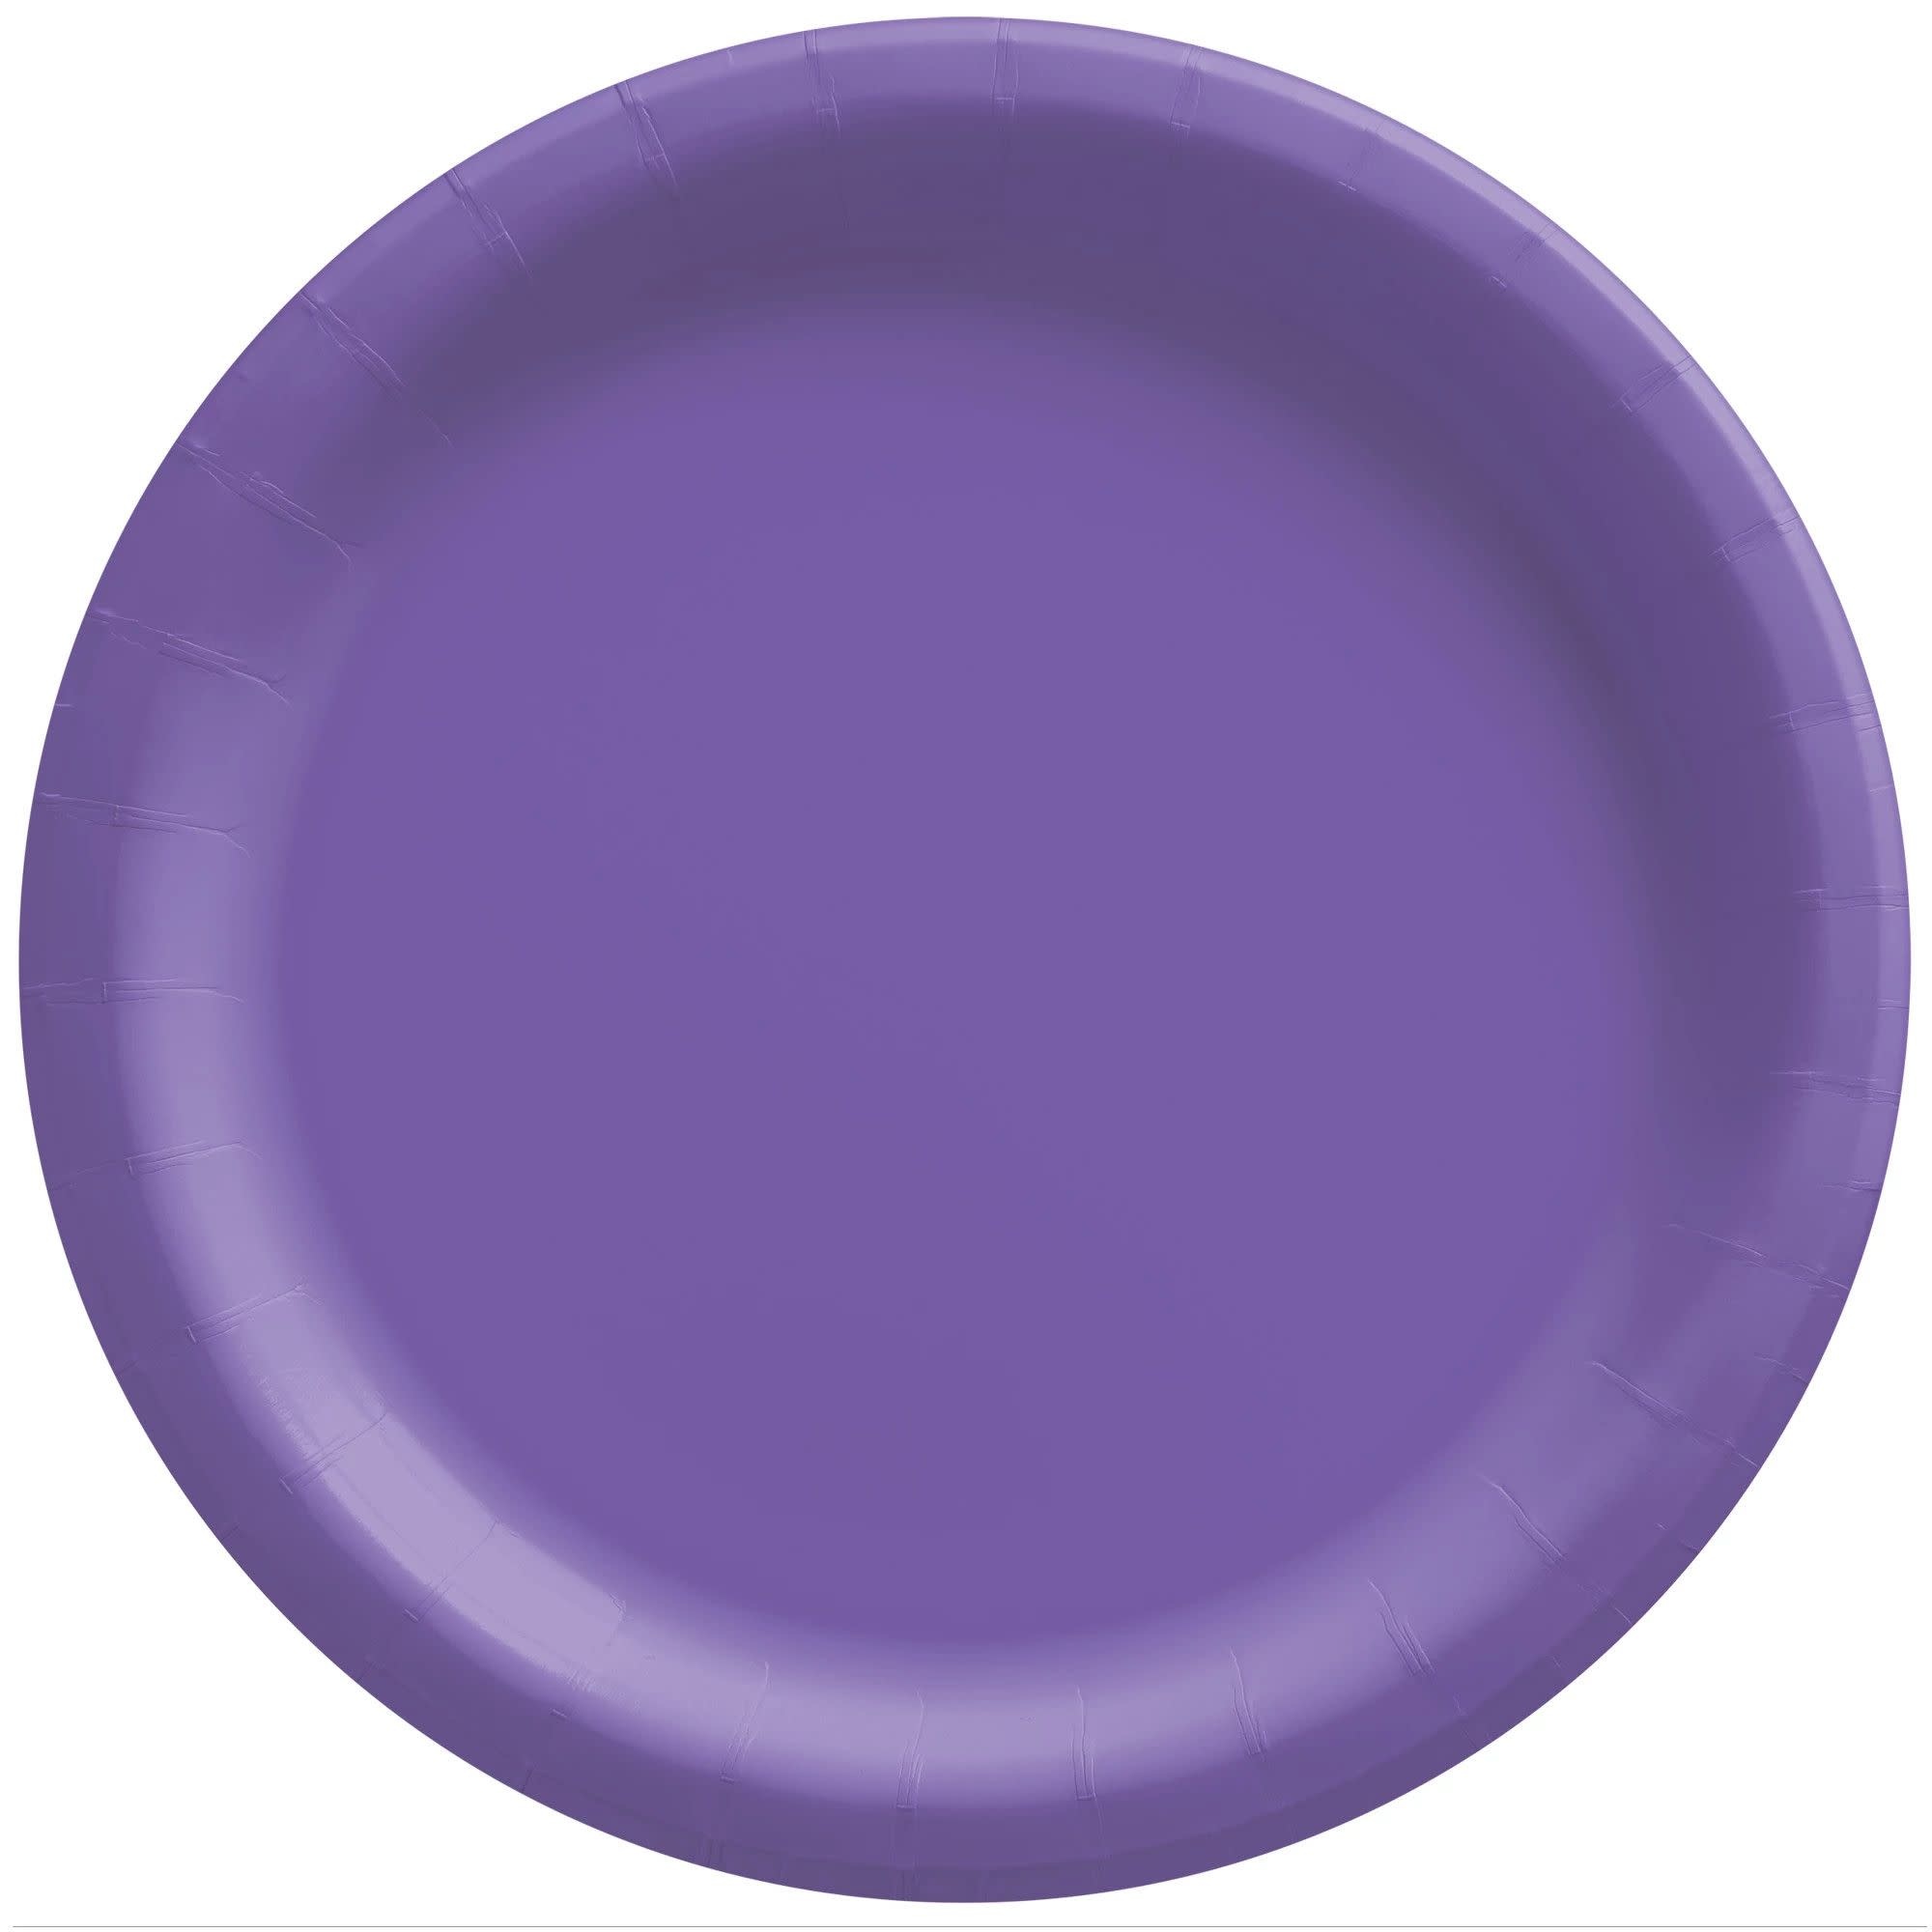 10" Round Paper Plates, Mid Ct. - New Purple